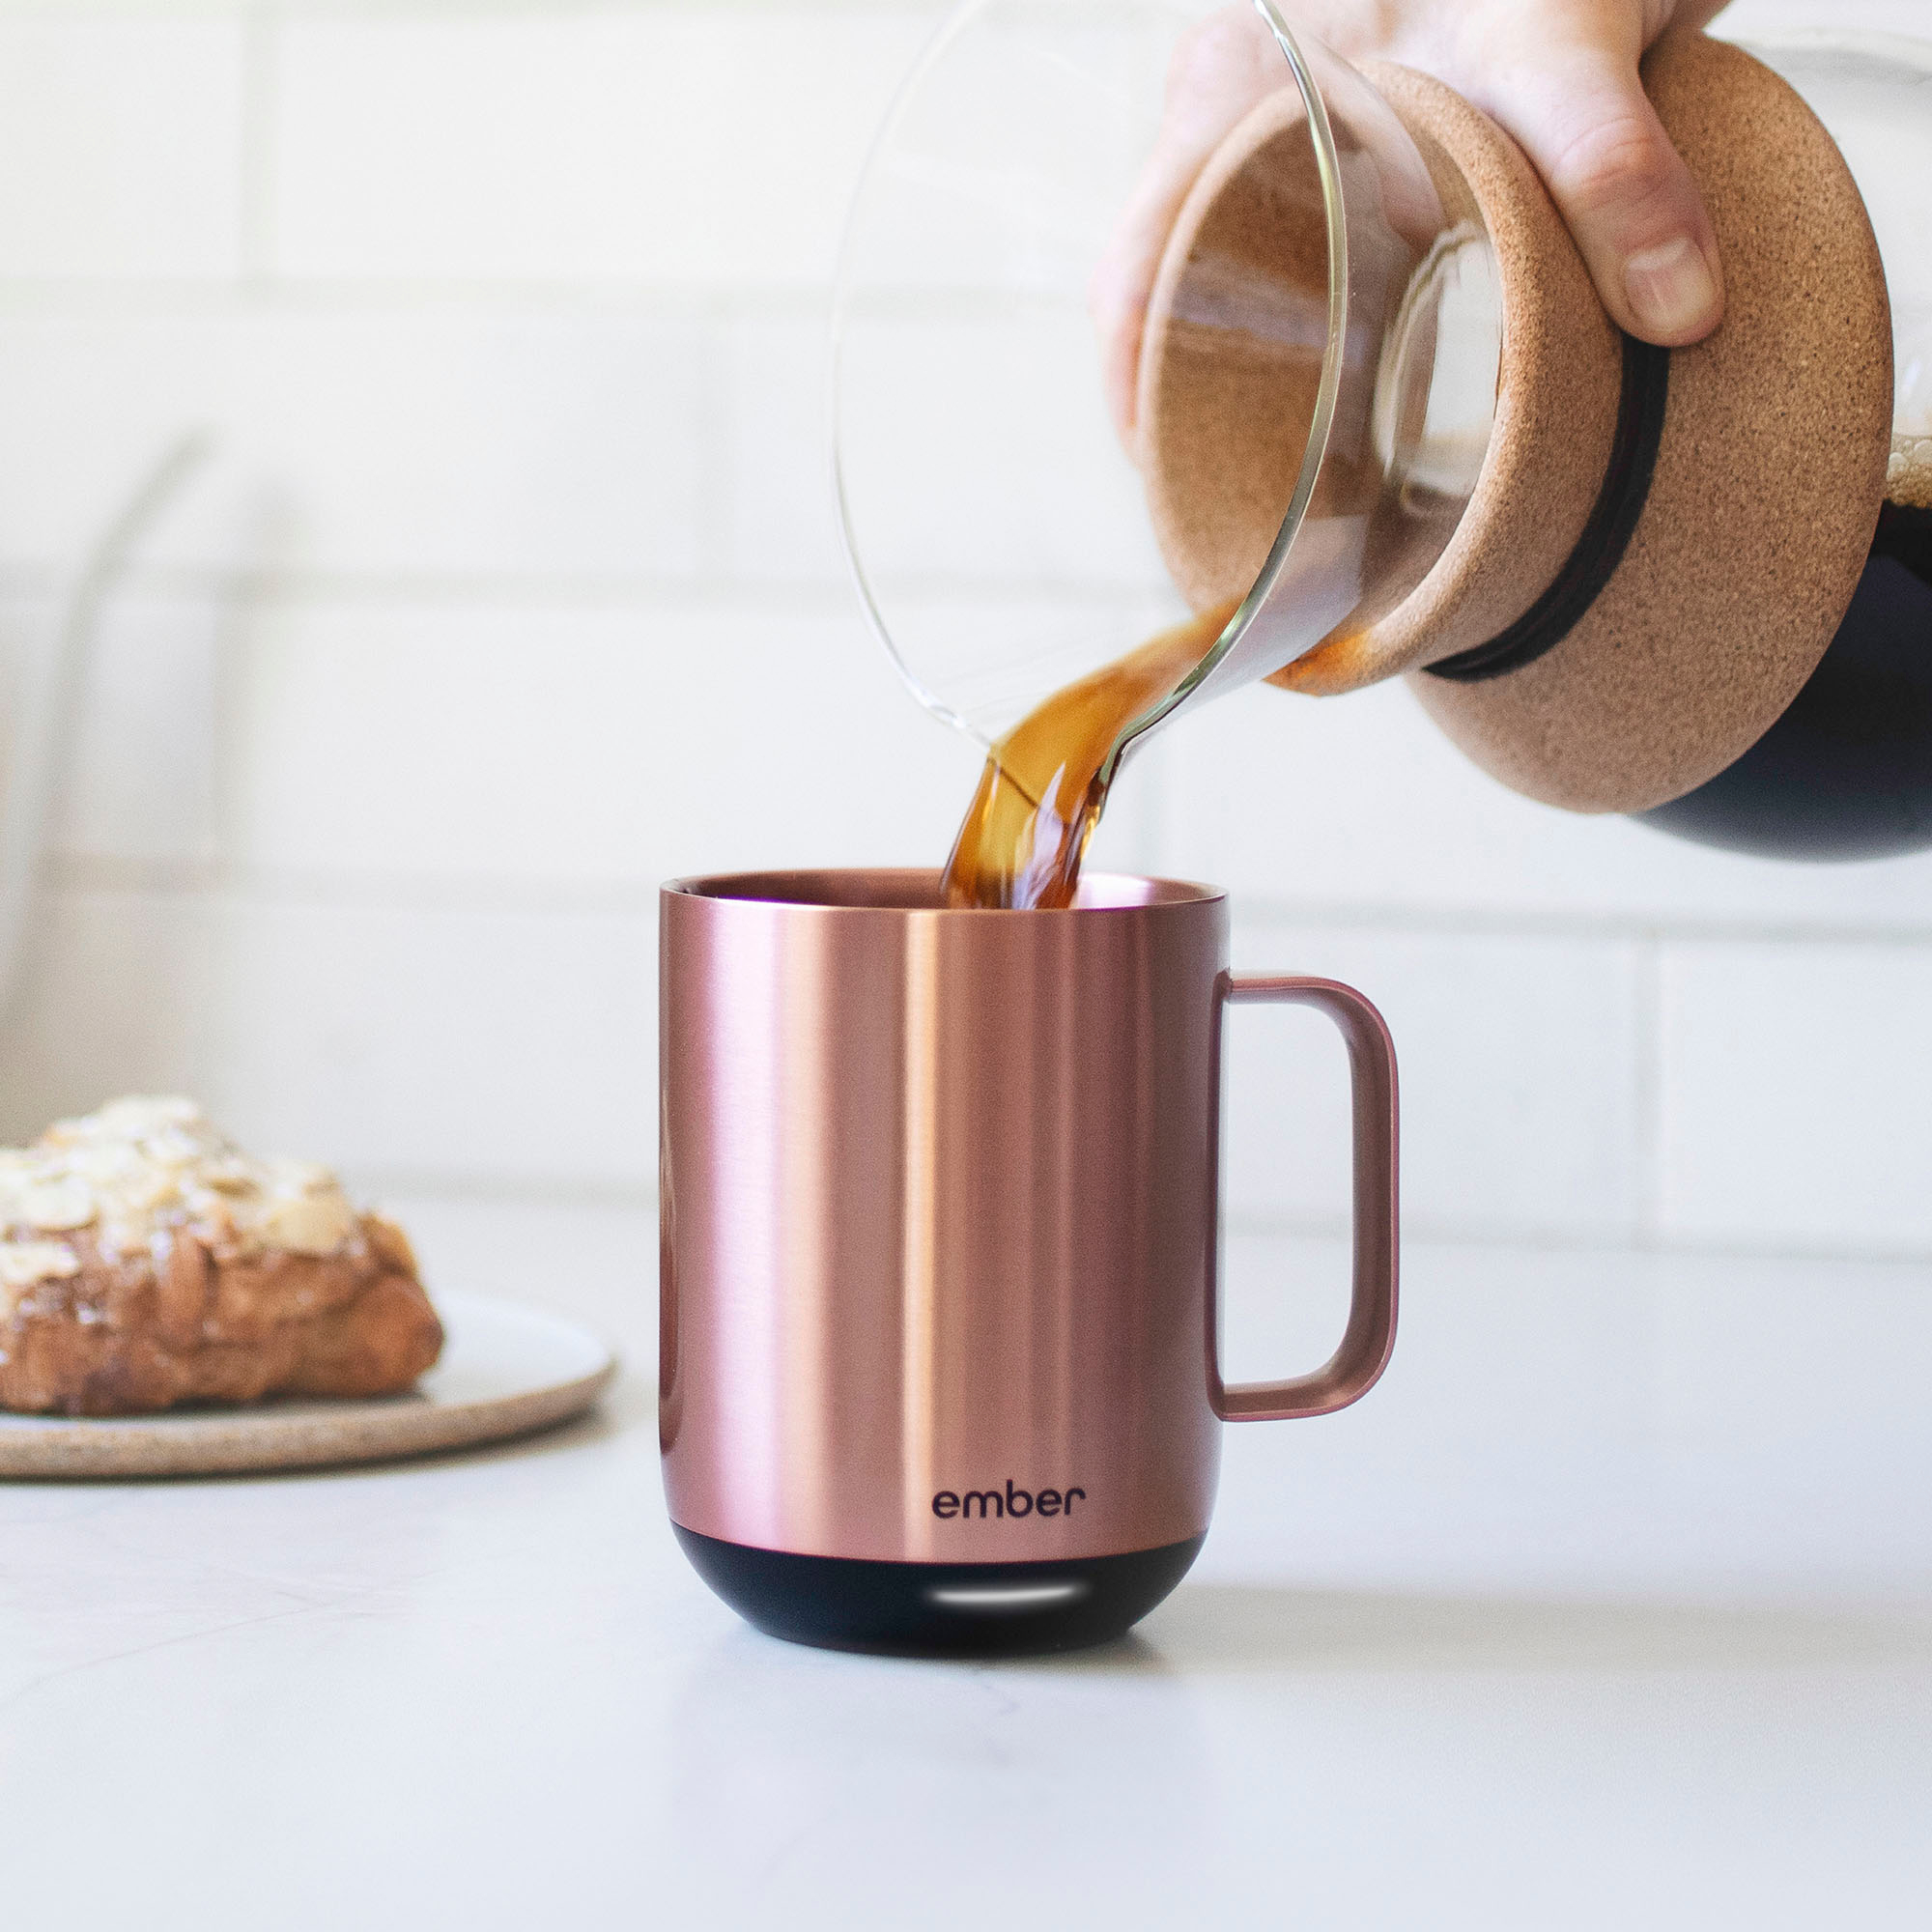 Temperature Control Smart Mug 2 with Lid, Heating Coffee Mug 10 oz